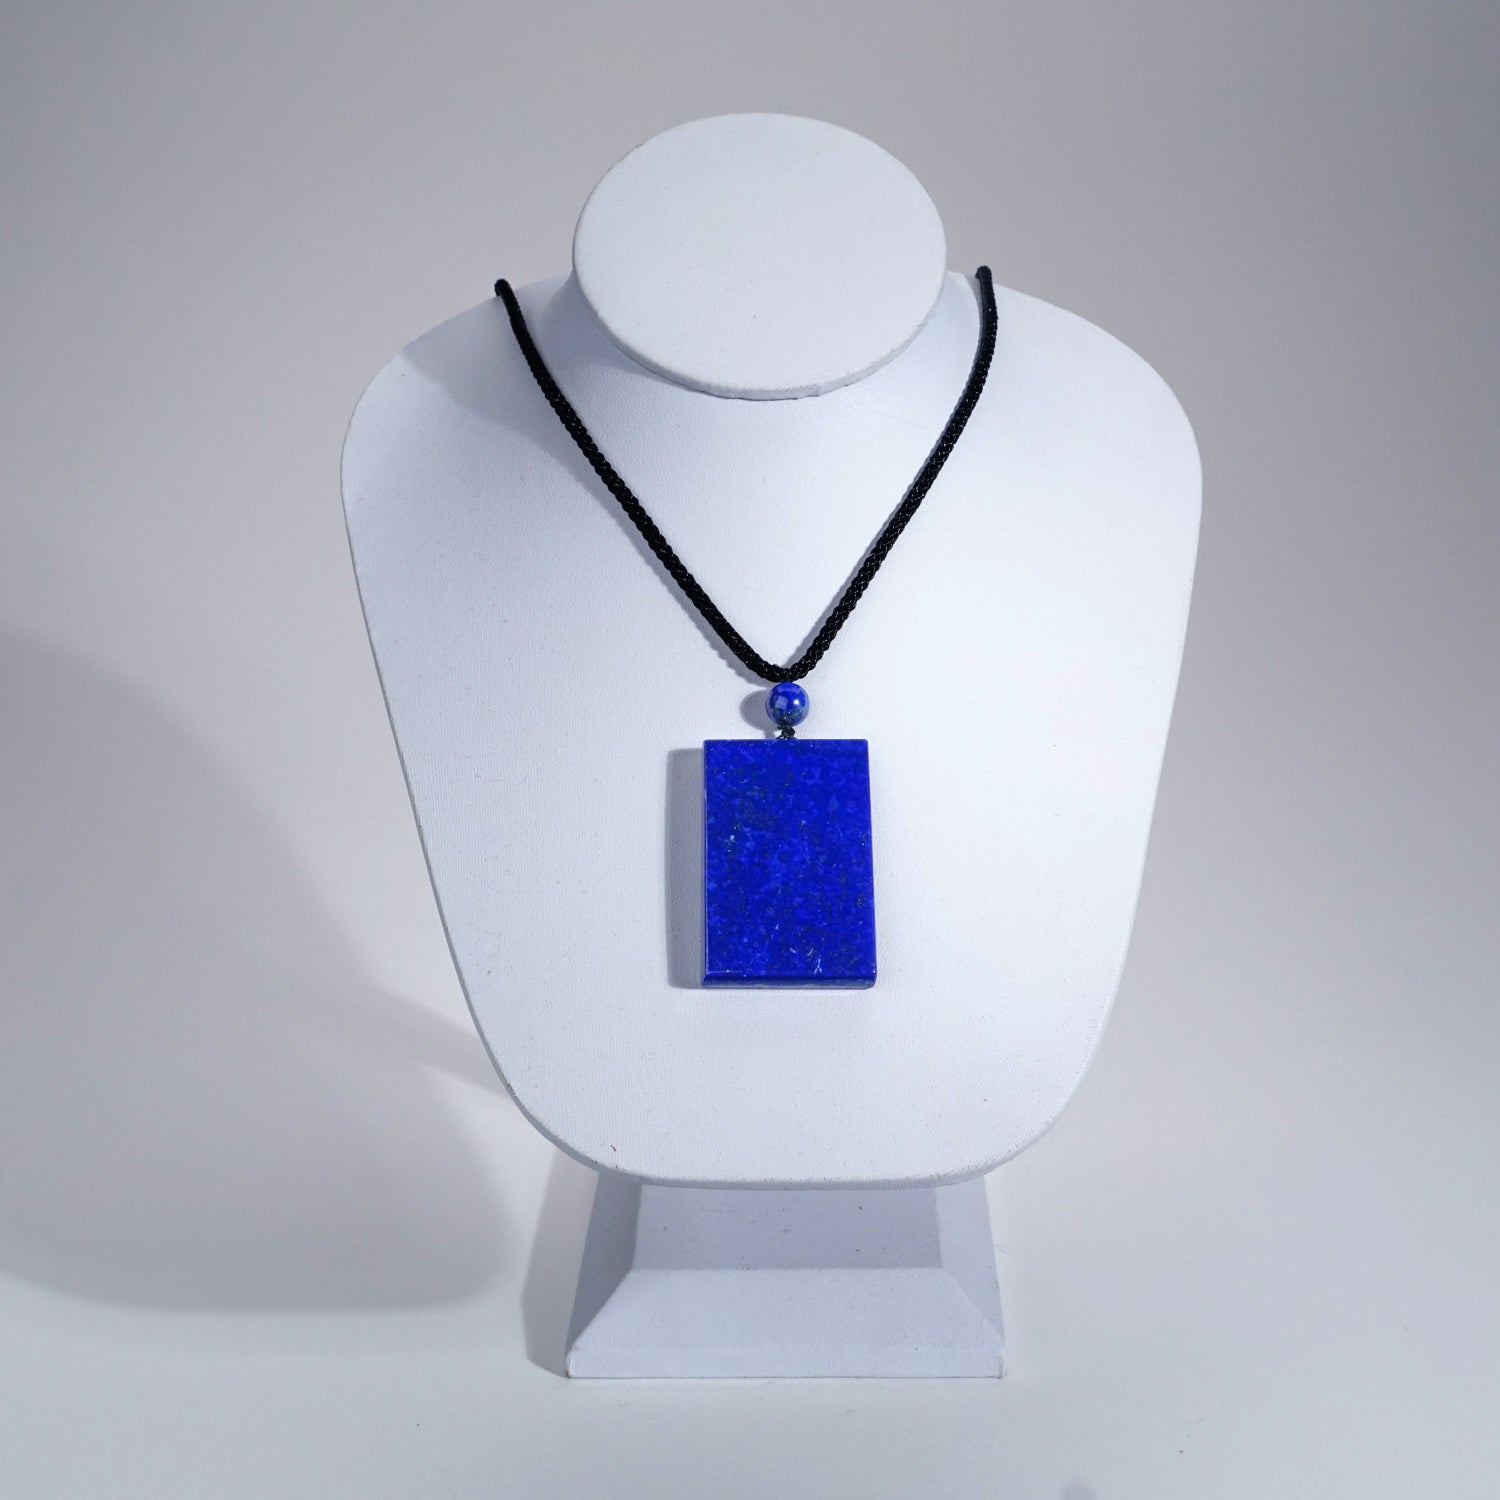 Genuine Lapis Lazuli Pendant with Adjustable Length Black Cord